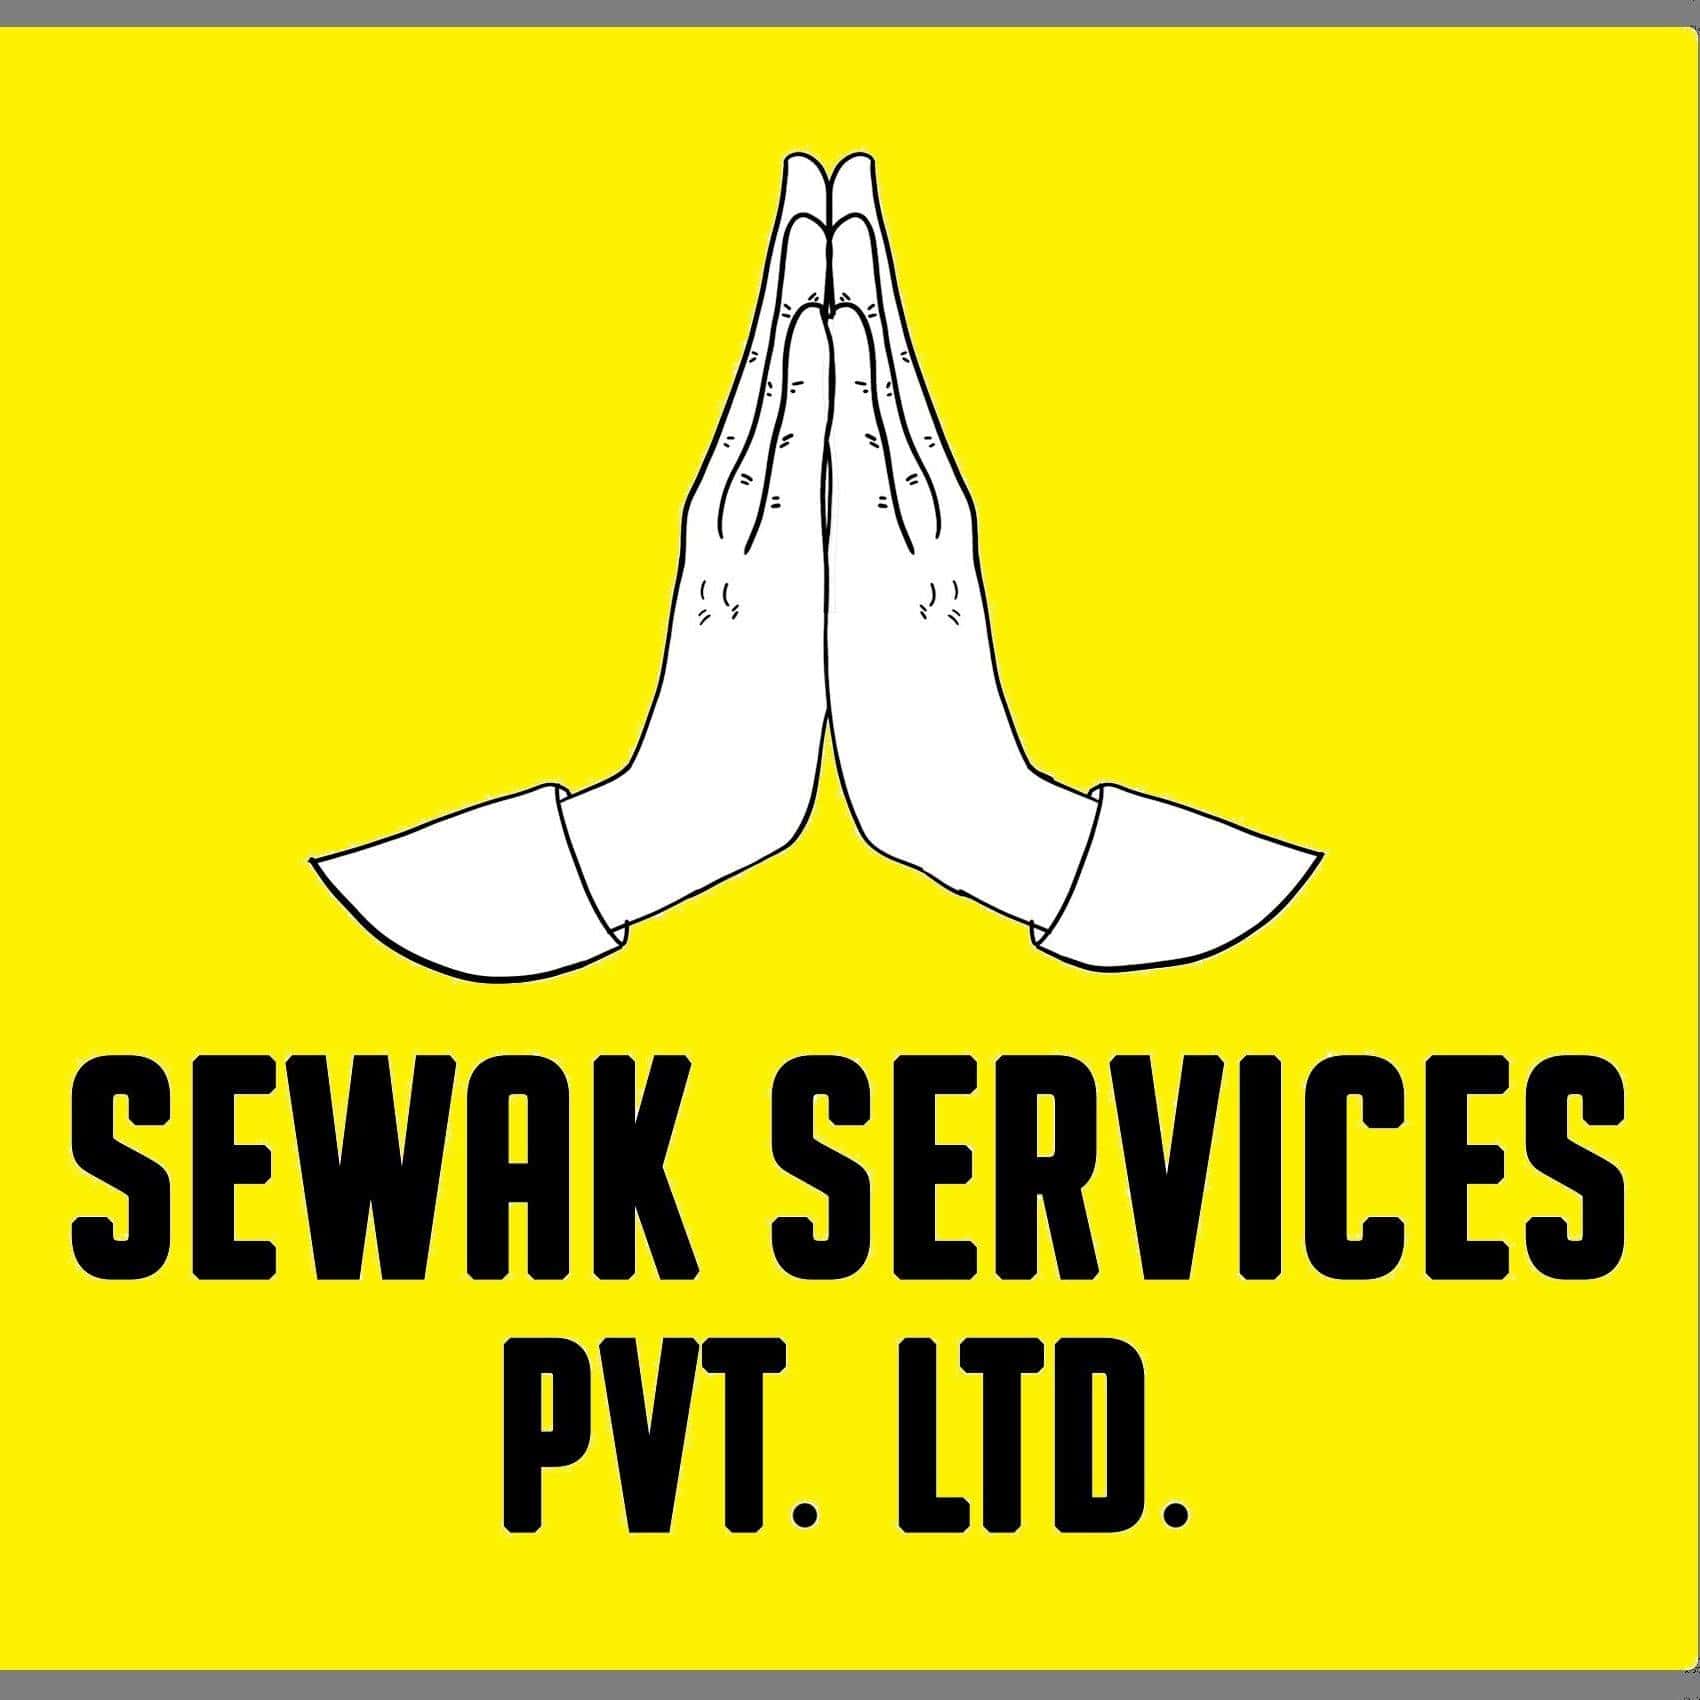 Sewak Services Pvt. Ltd